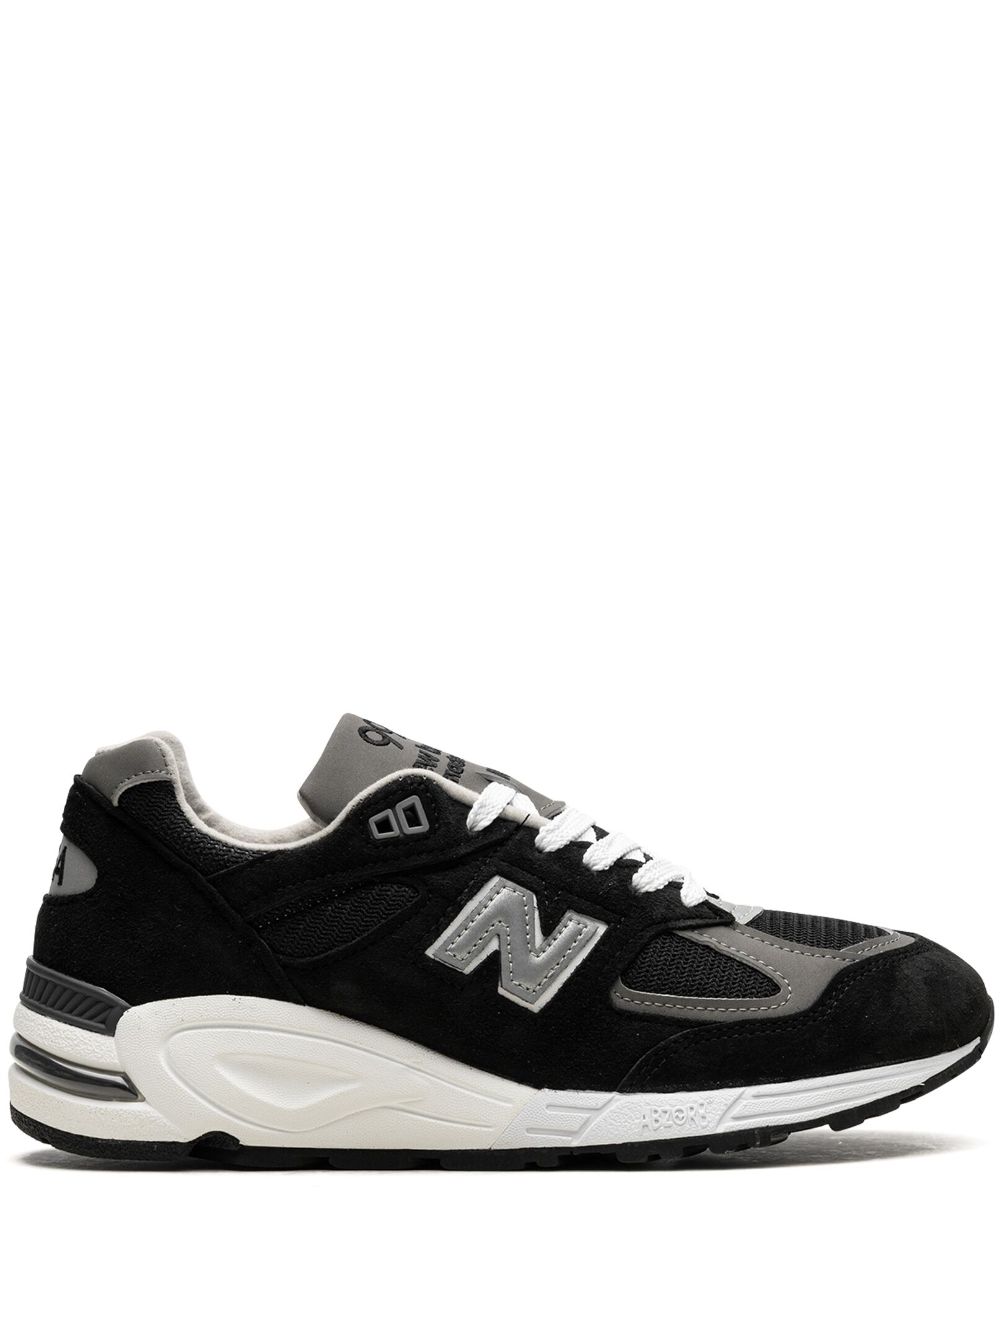 New Balance 990 "Black/White" sneakers